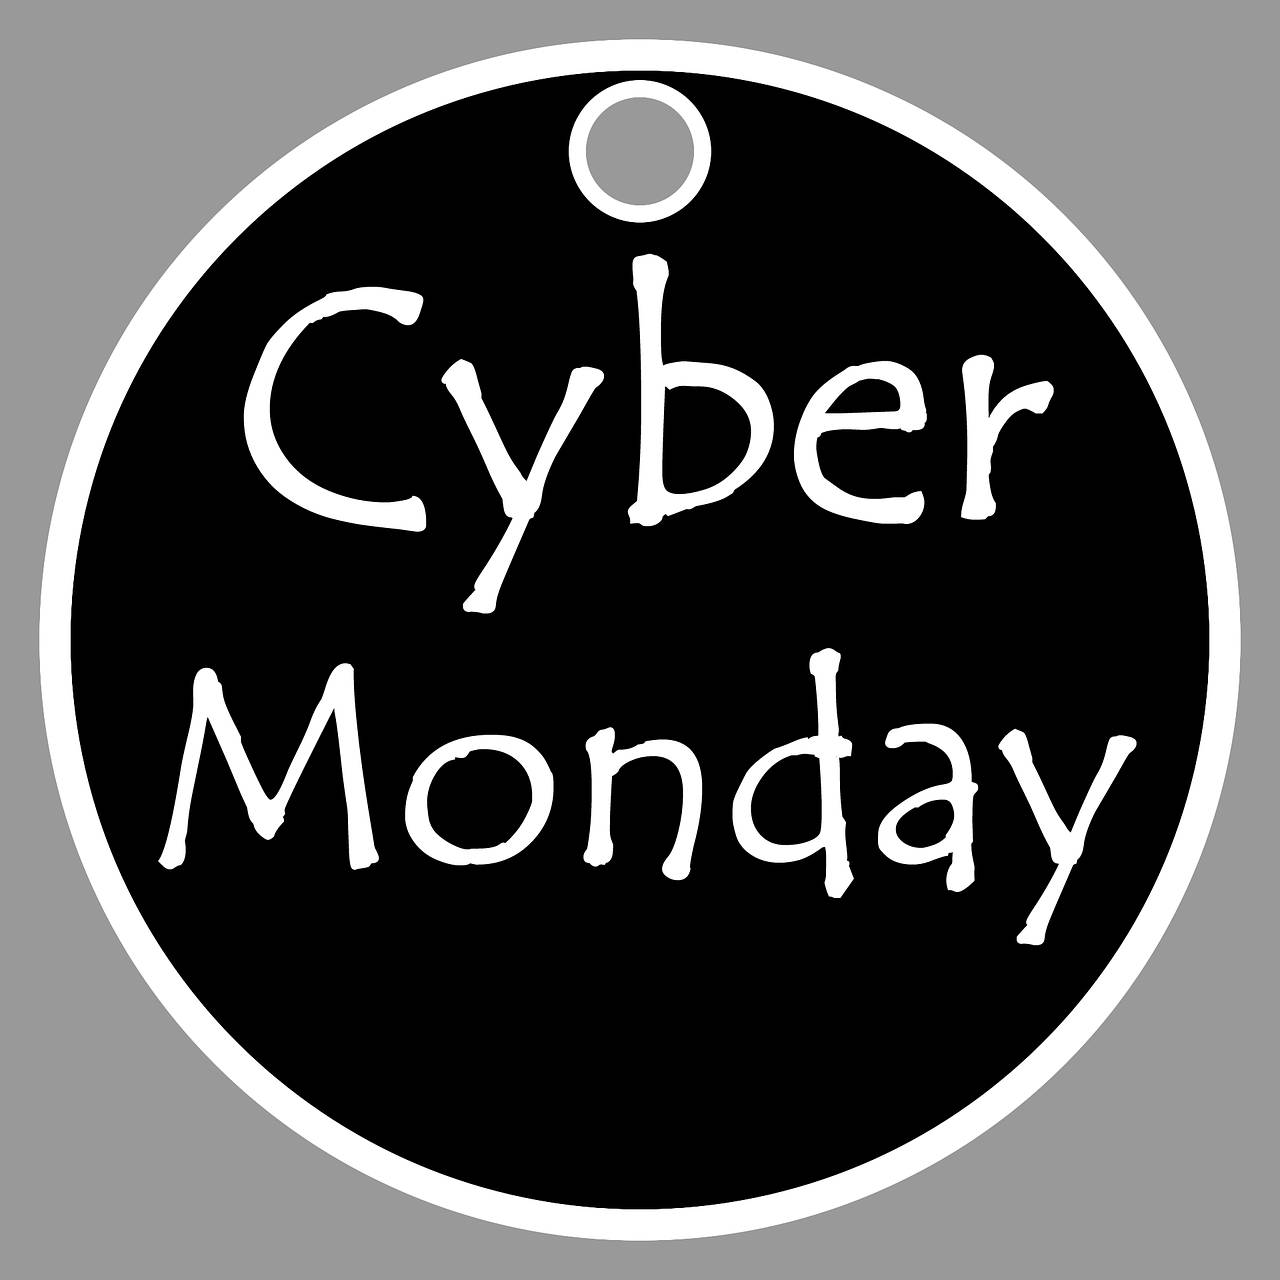 Cyber Monday Circular Door Signage Background